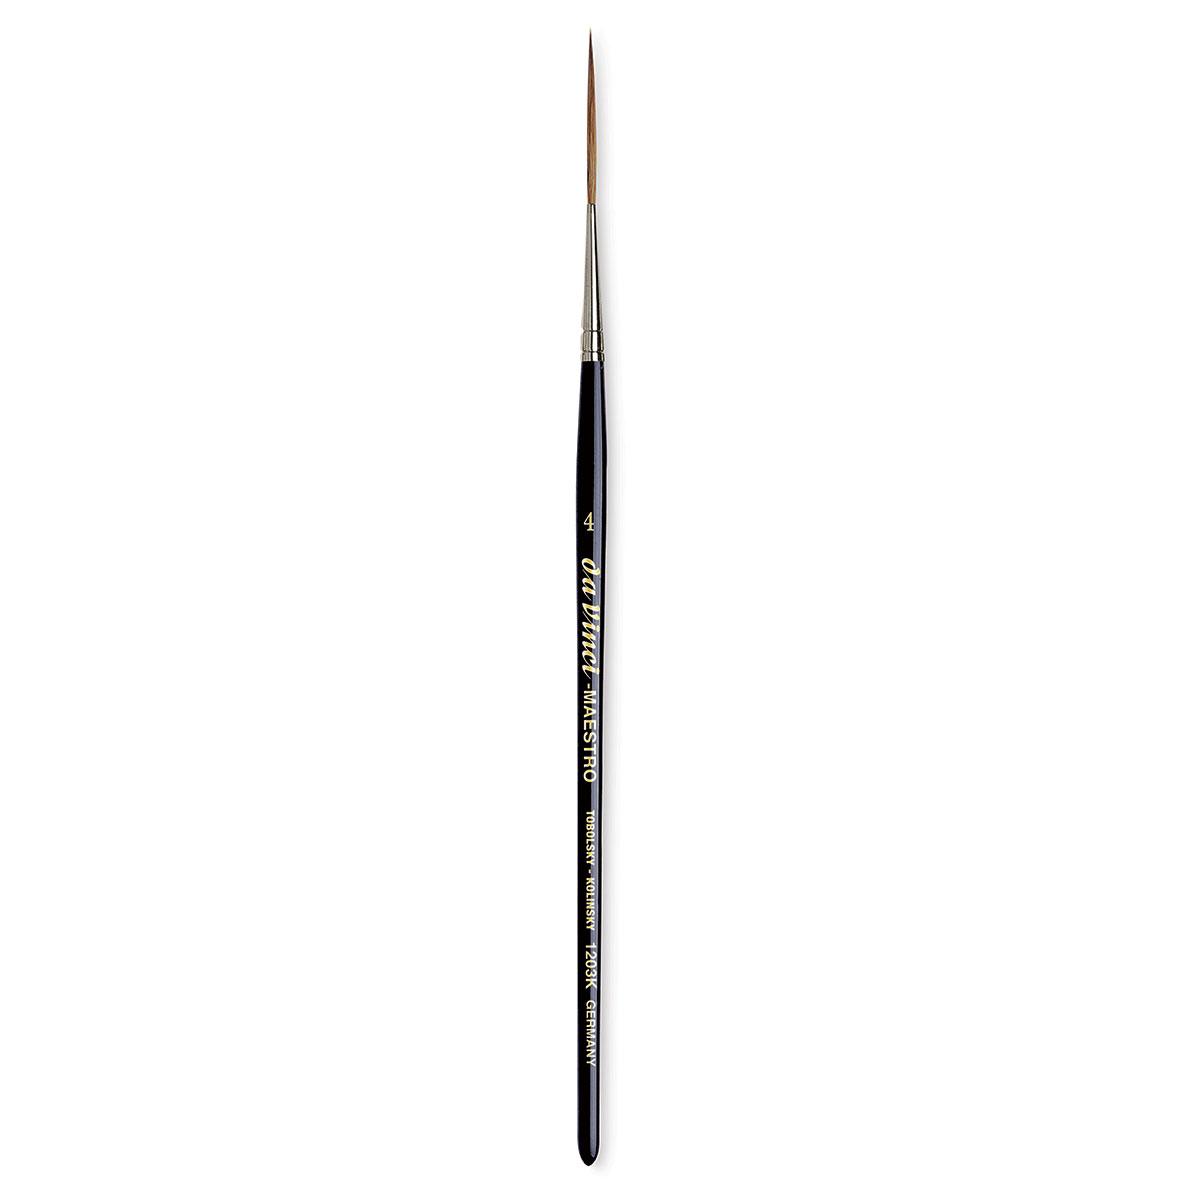 da Vinci Rigger Brush (Extra Long) Series 1203K